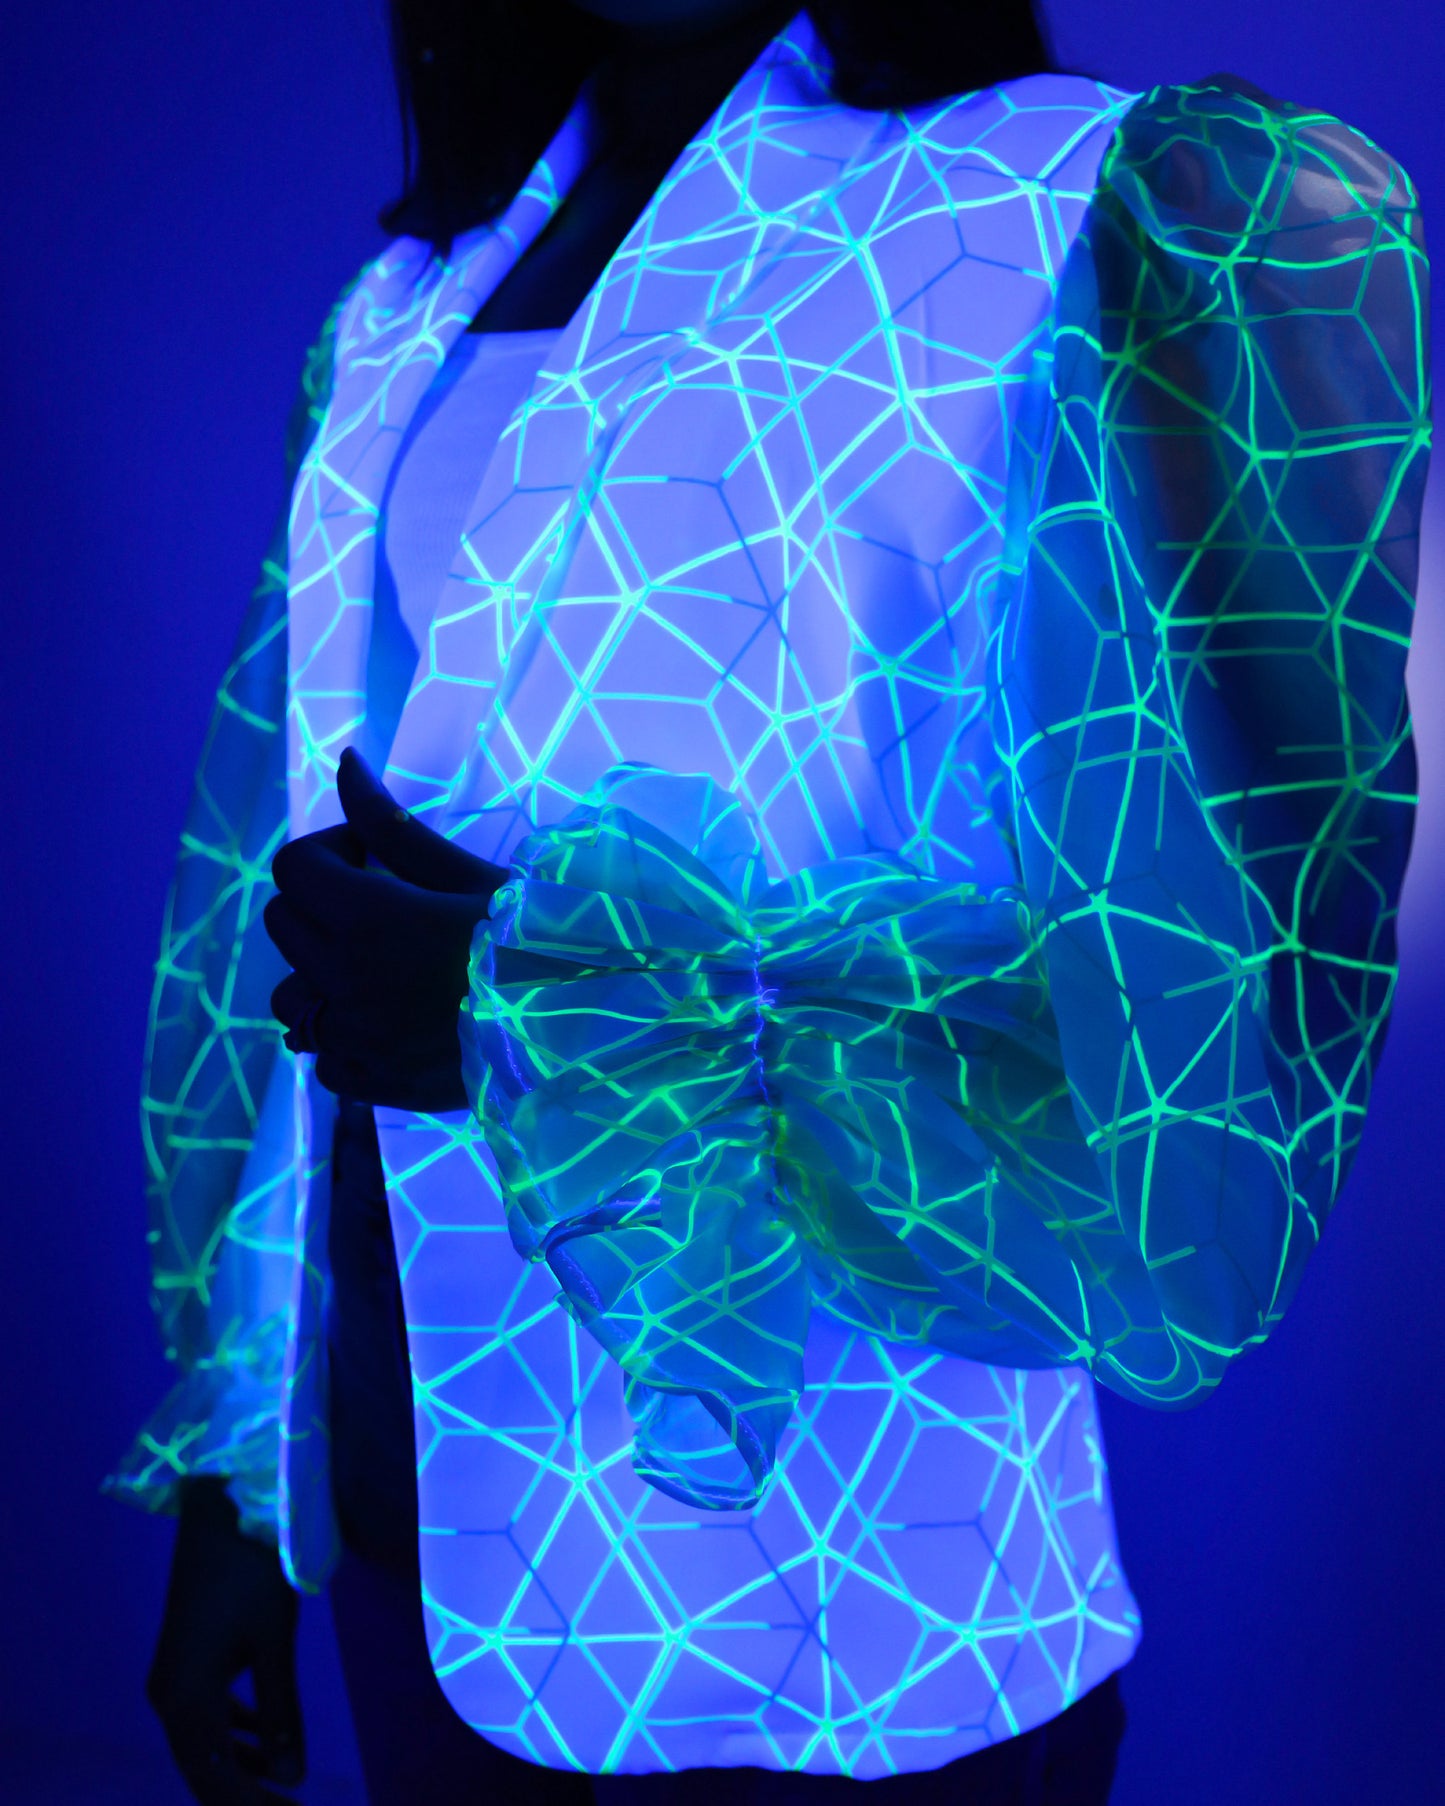 Neon Web Wonder: Puff Sleeve Women's Jacket